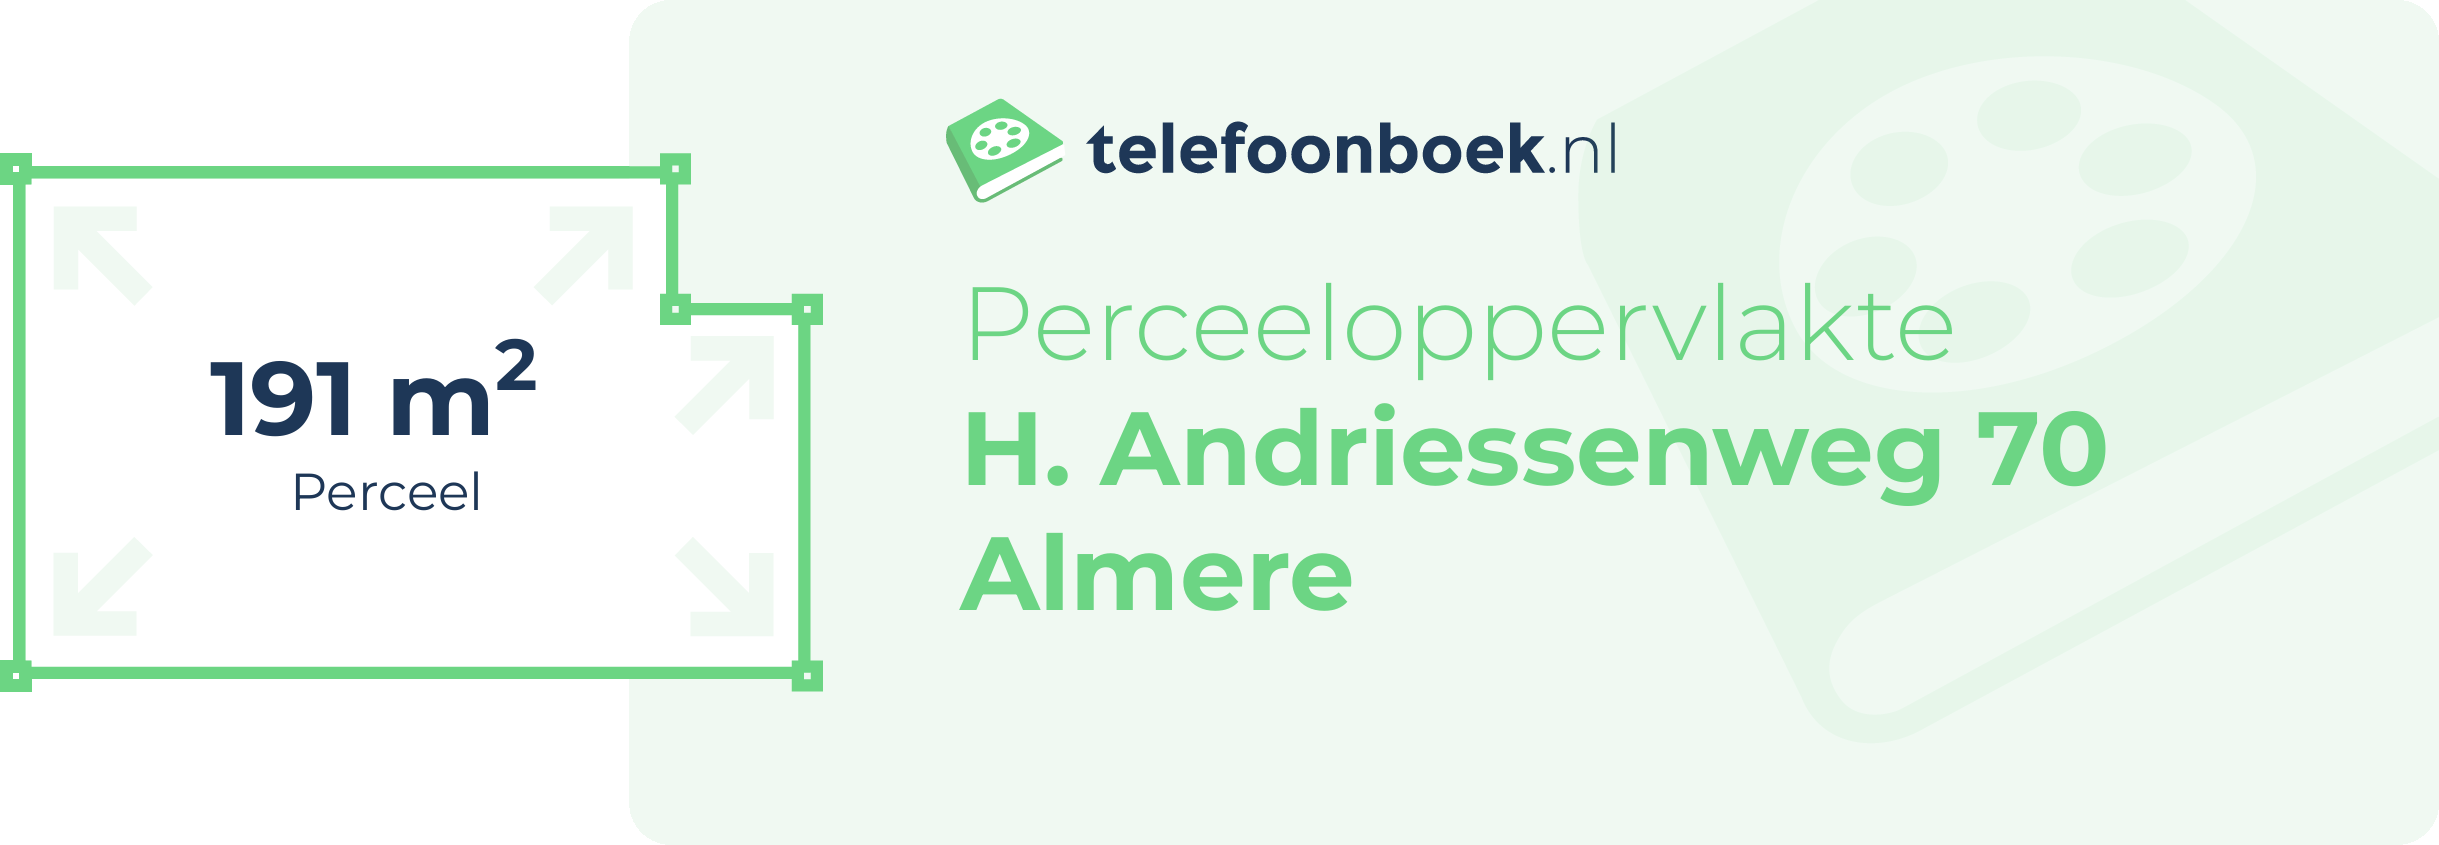 Perceeloppervlakte H. Andriessenweg 70 Almere